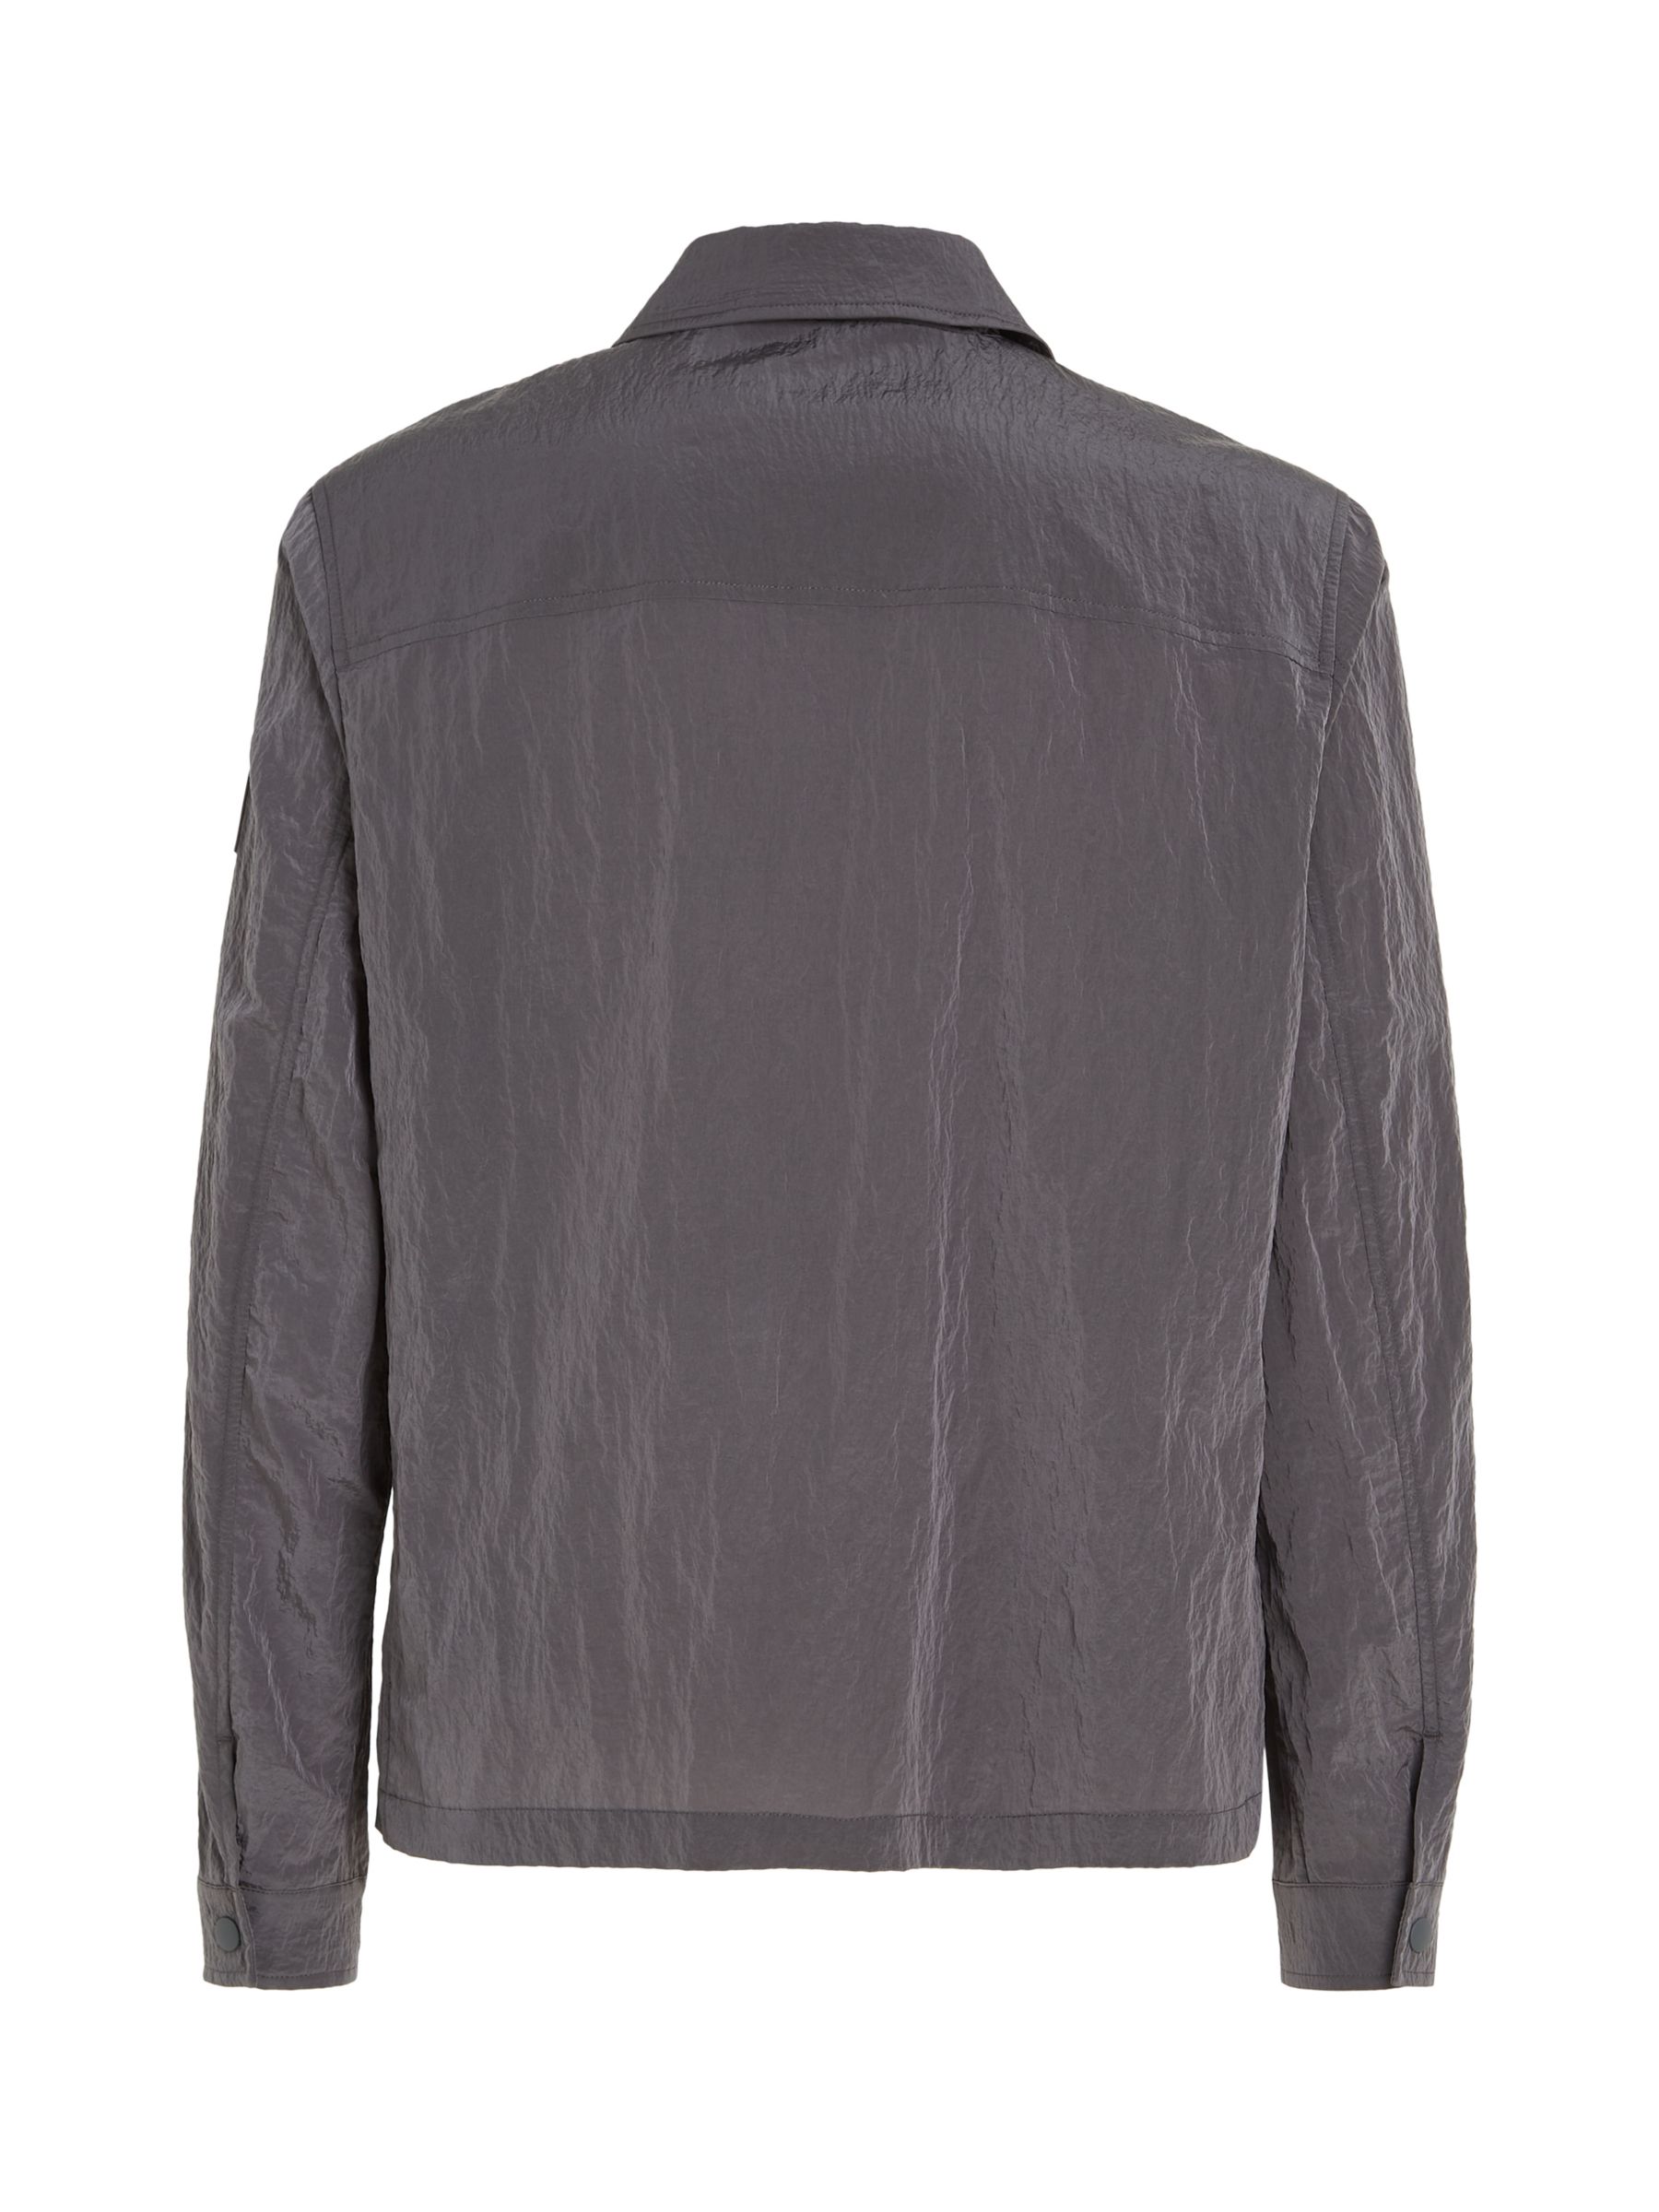 Calvin Klein Crinkle 2.0 Shirt Jacket, Grey, S